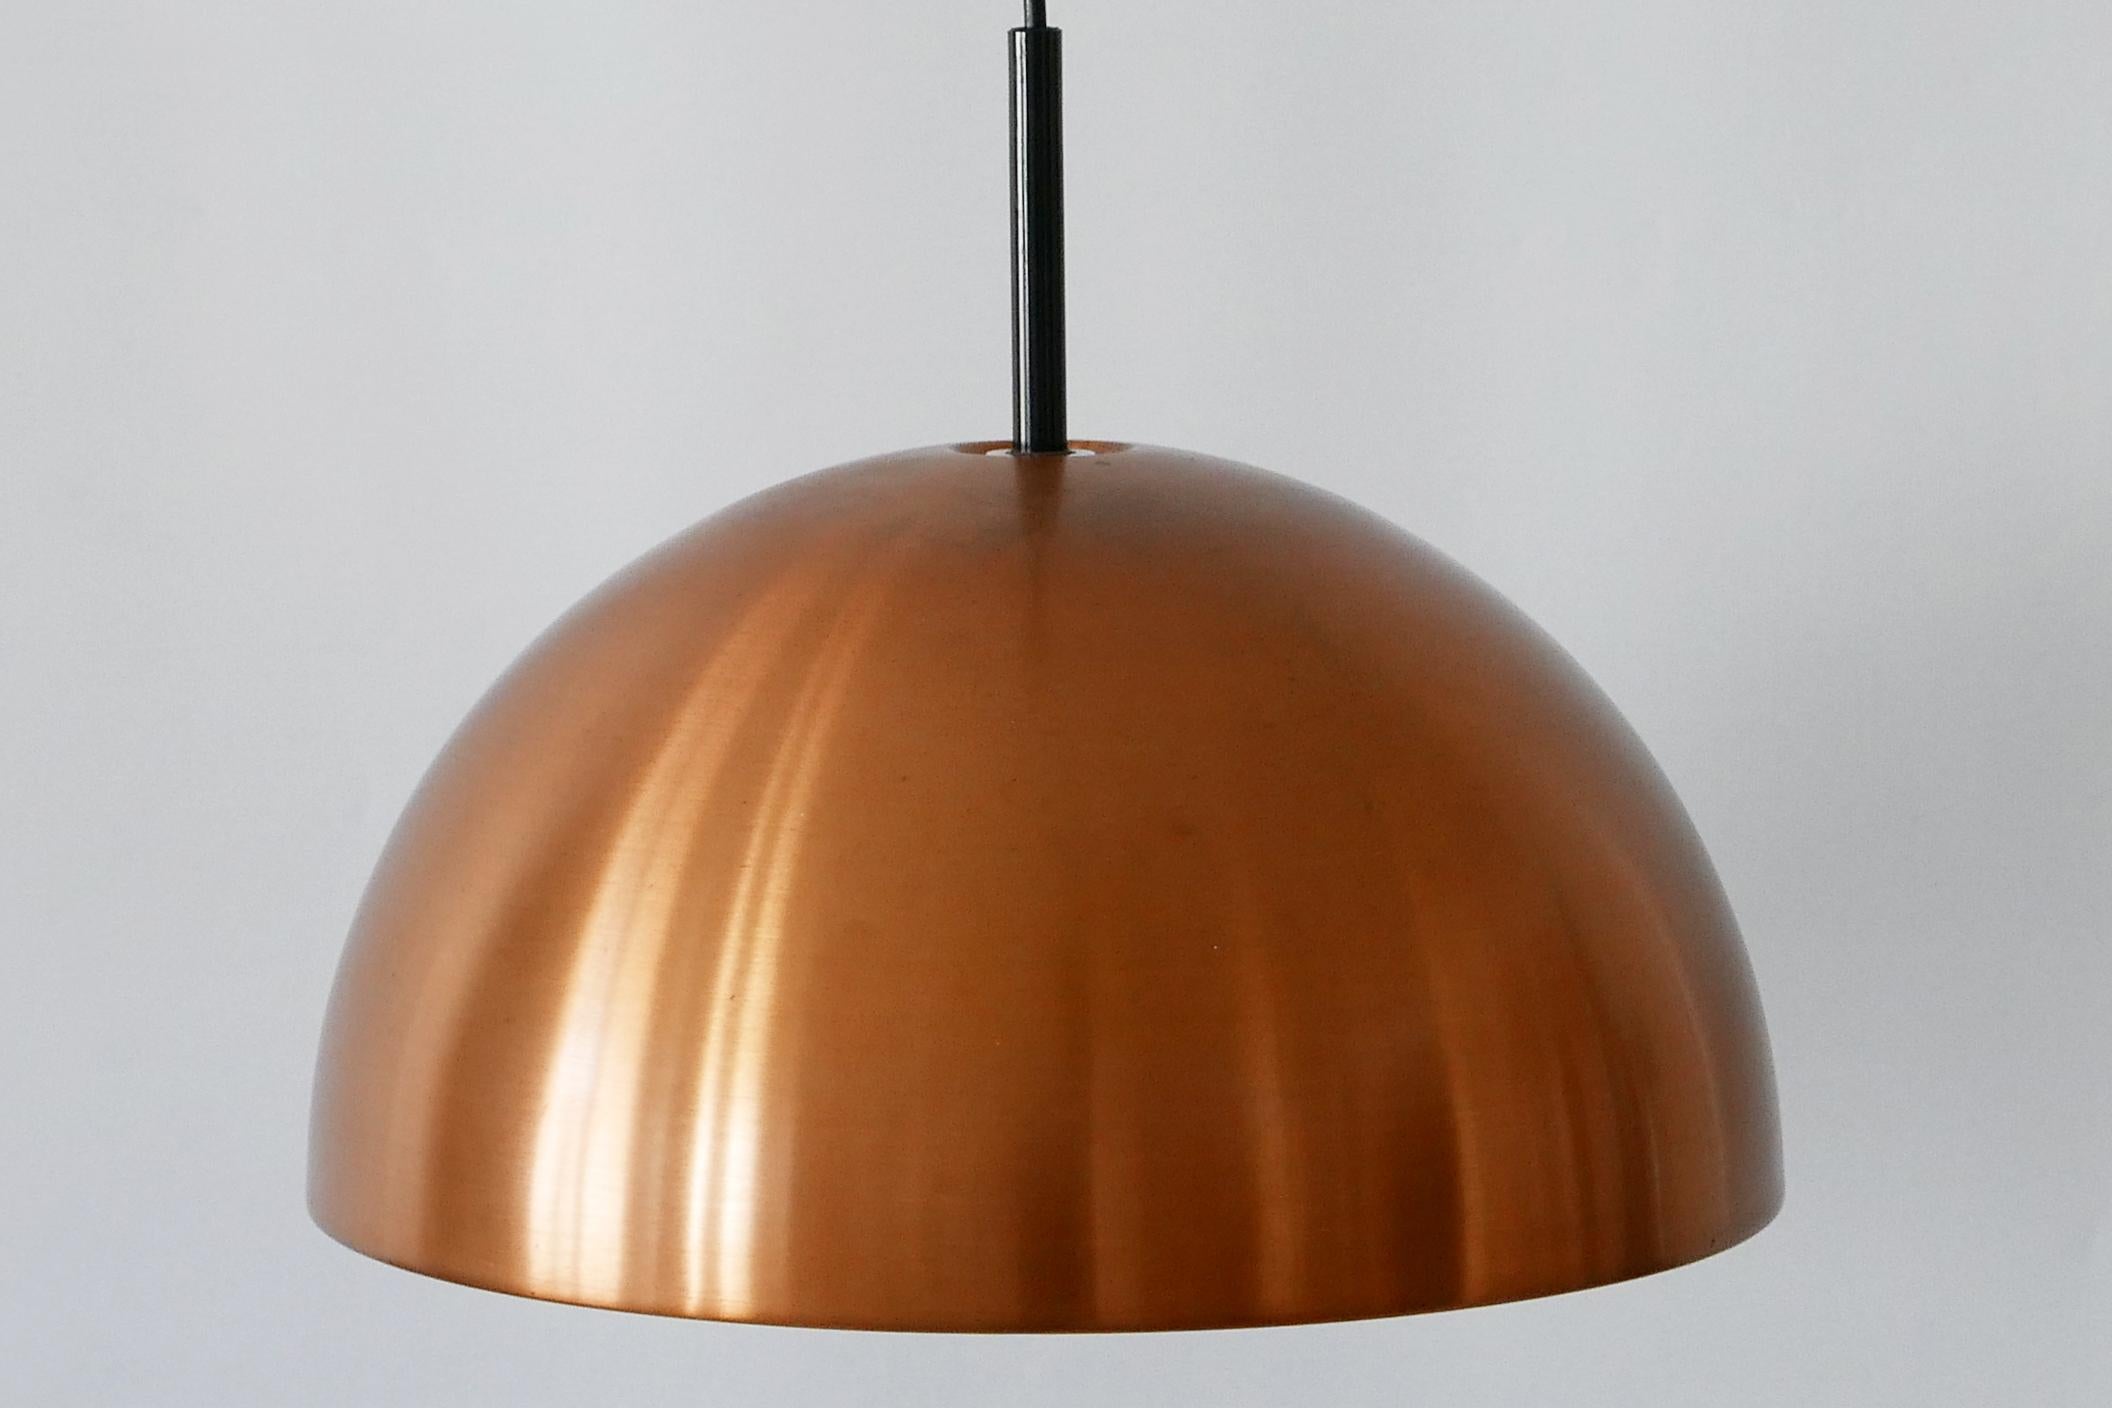 Elegant Mid-Century Modern Copper Pendant Lamp by Staff & Schwarz 1960s, Germany For Sale 2